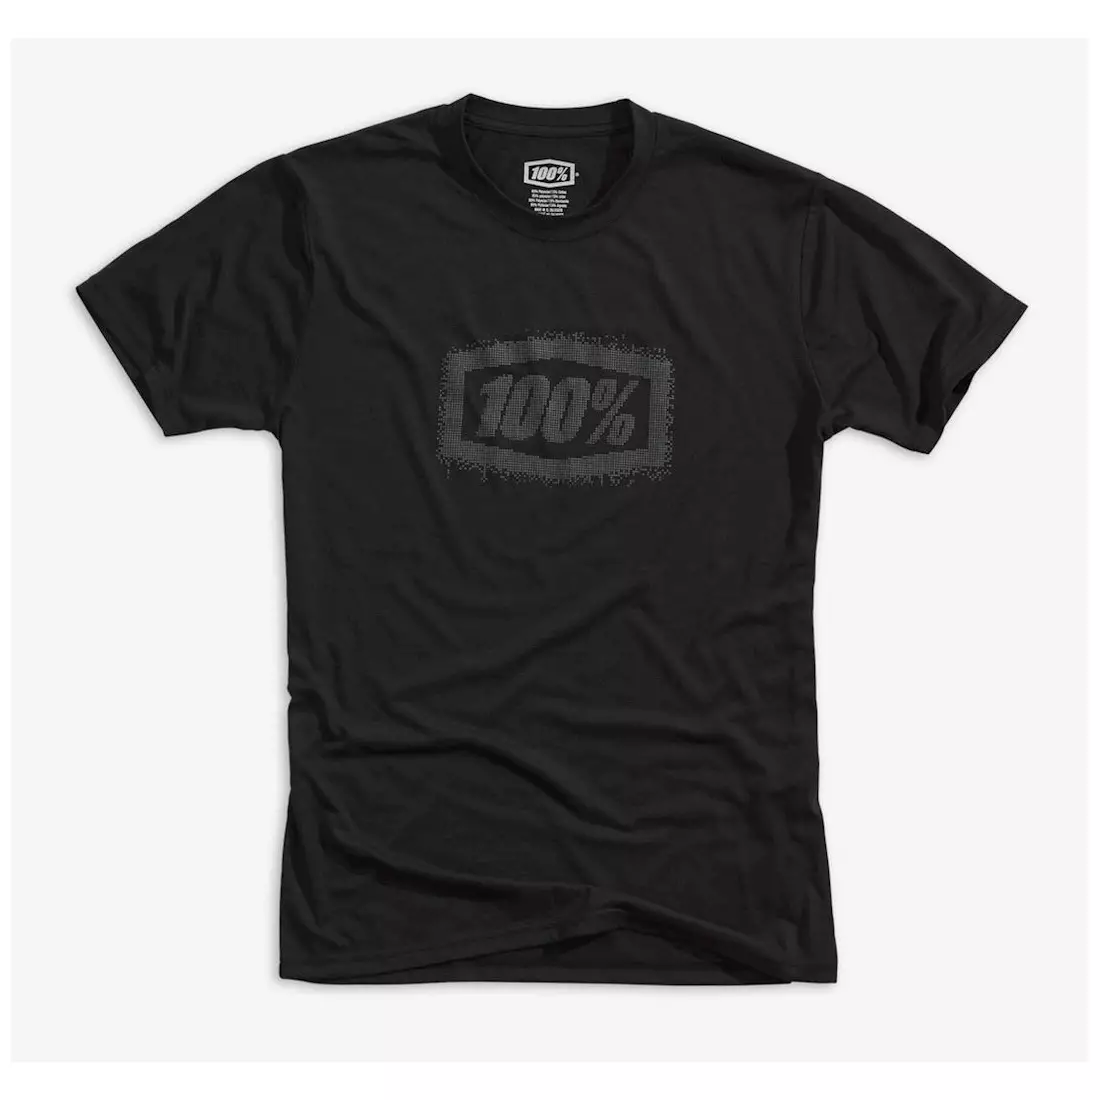 100% koszulka męska krótki rękaw positive tech tee black STO-35011-001-11